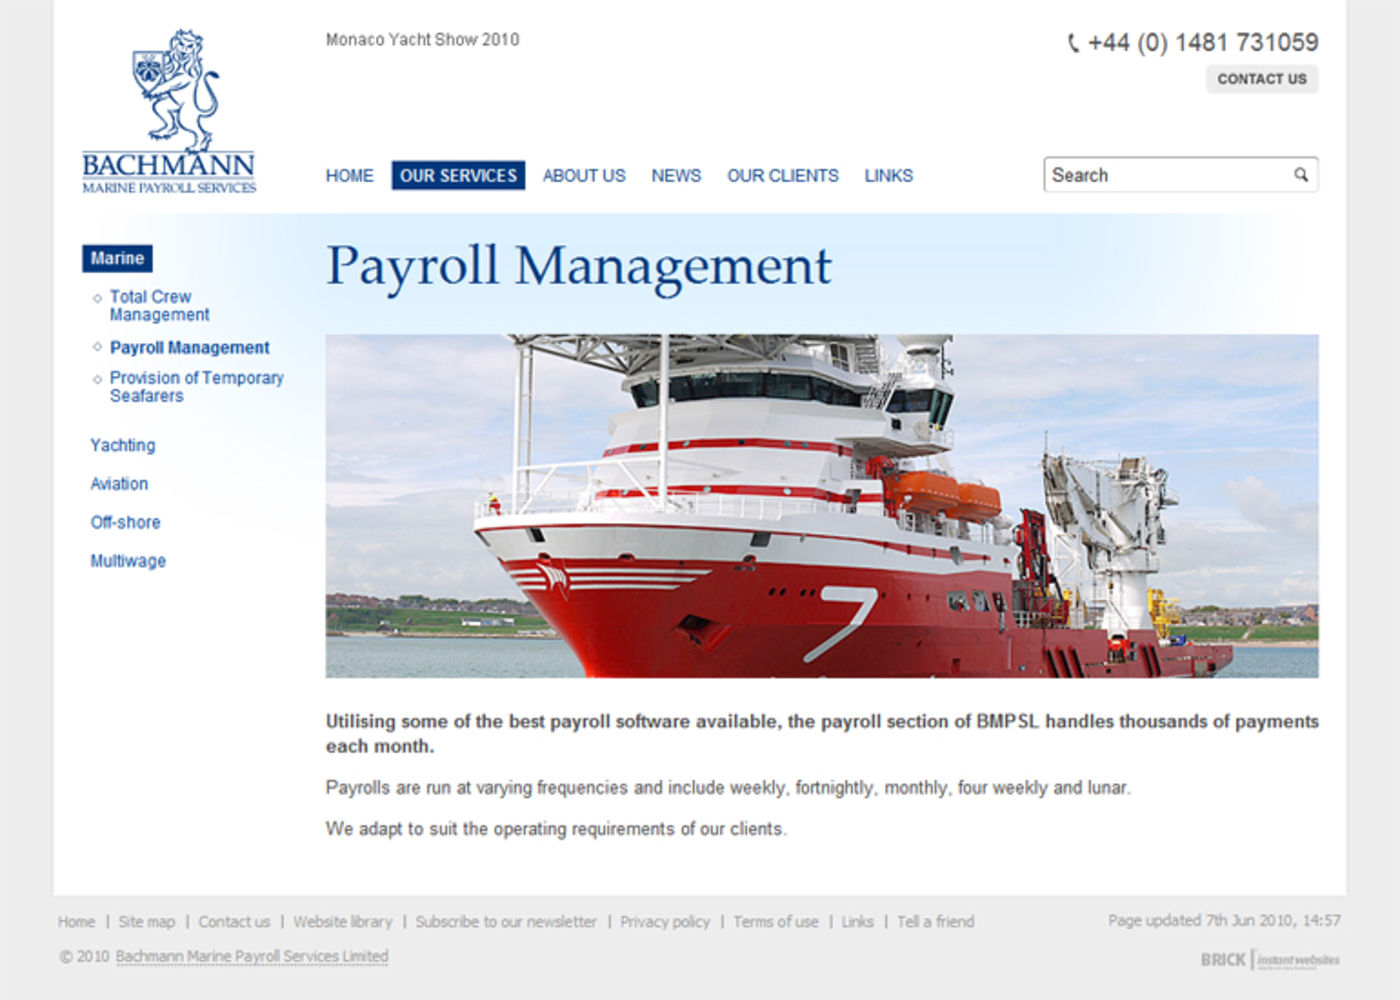 Bachmann Marine Payroll Services Regular page